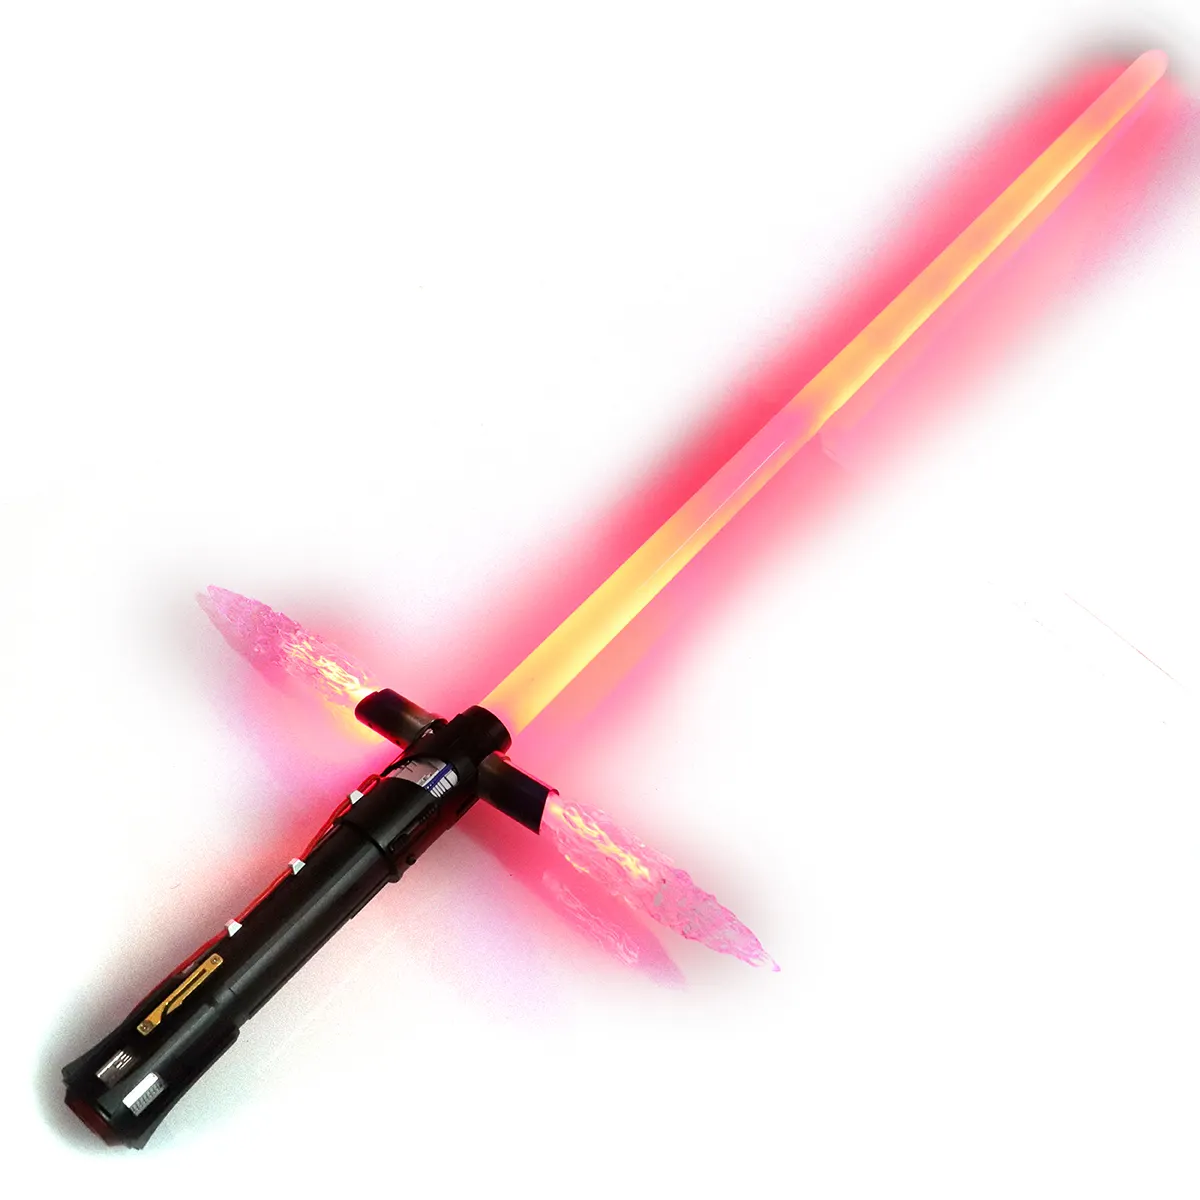 Lgt Saberstudio Kylo Ren star laser sword infinite color sensitive rechargeable lightsaber for cosplay entertainment